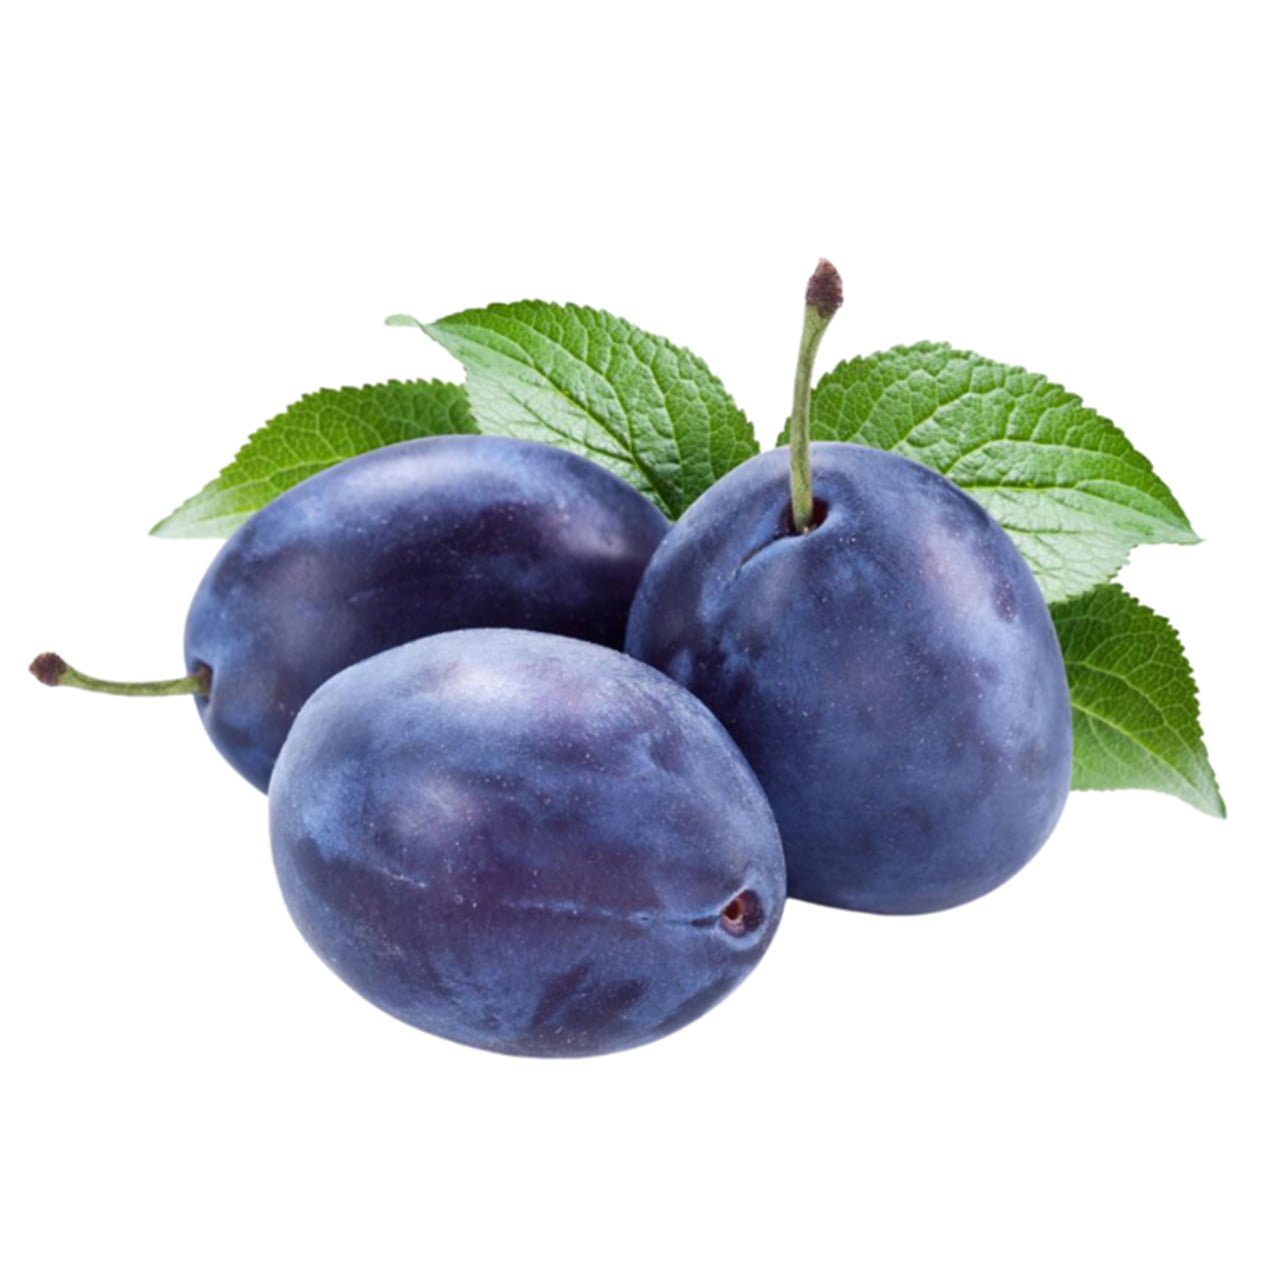 fresh prune fruit